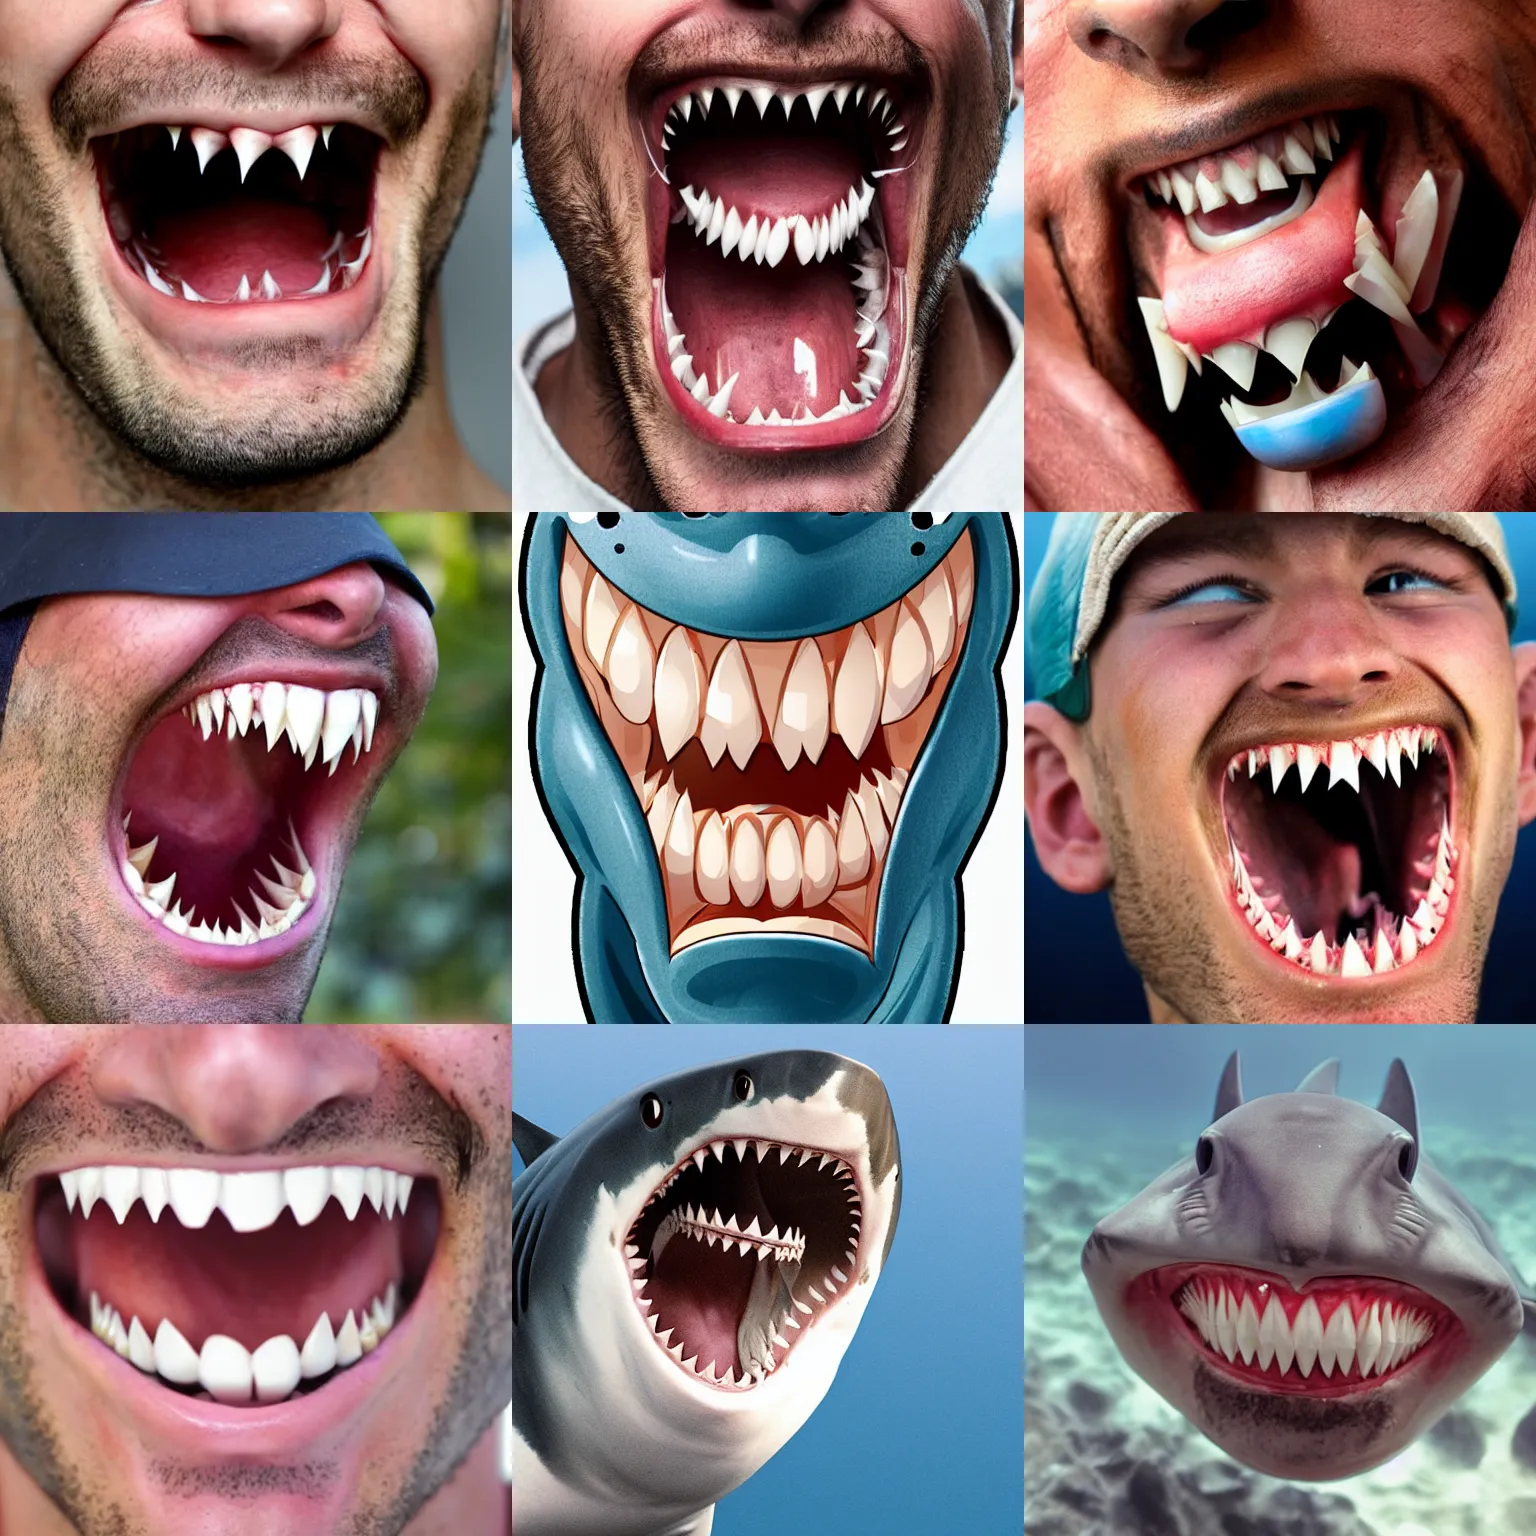 Prompt: a man shark teeth